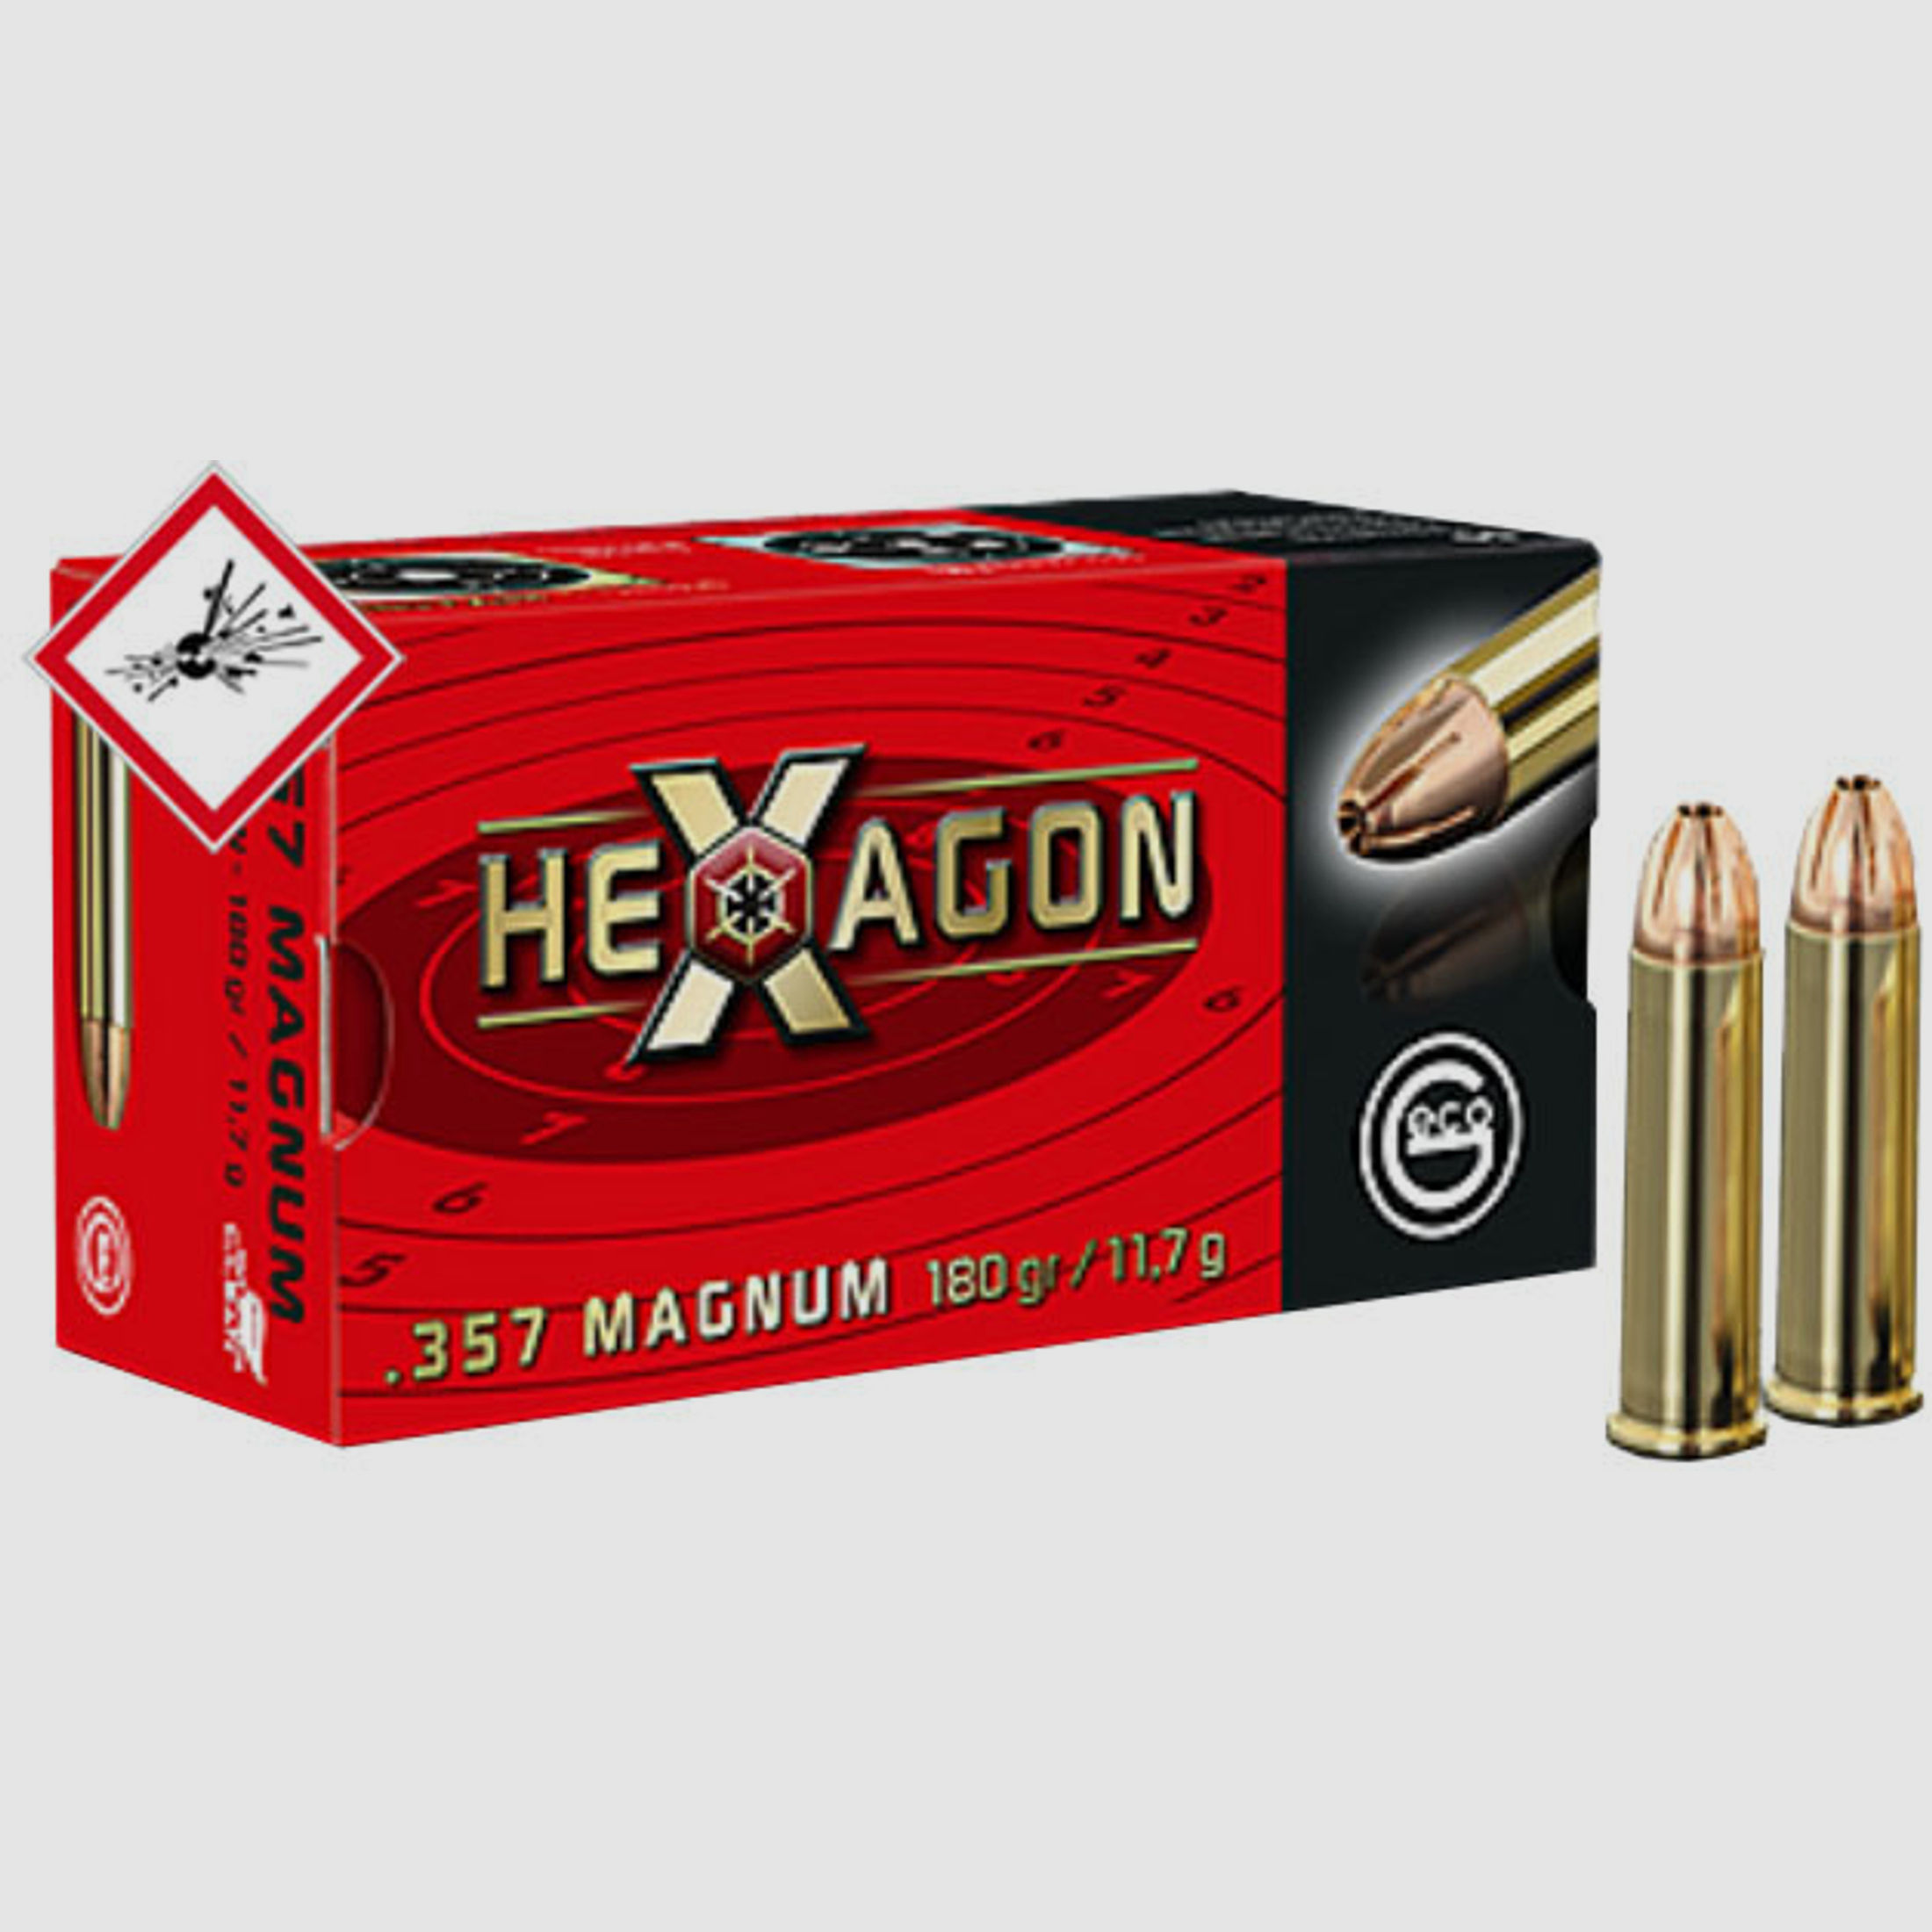 Geco Hexagon Revolverpatrone .357 Mag 180grs